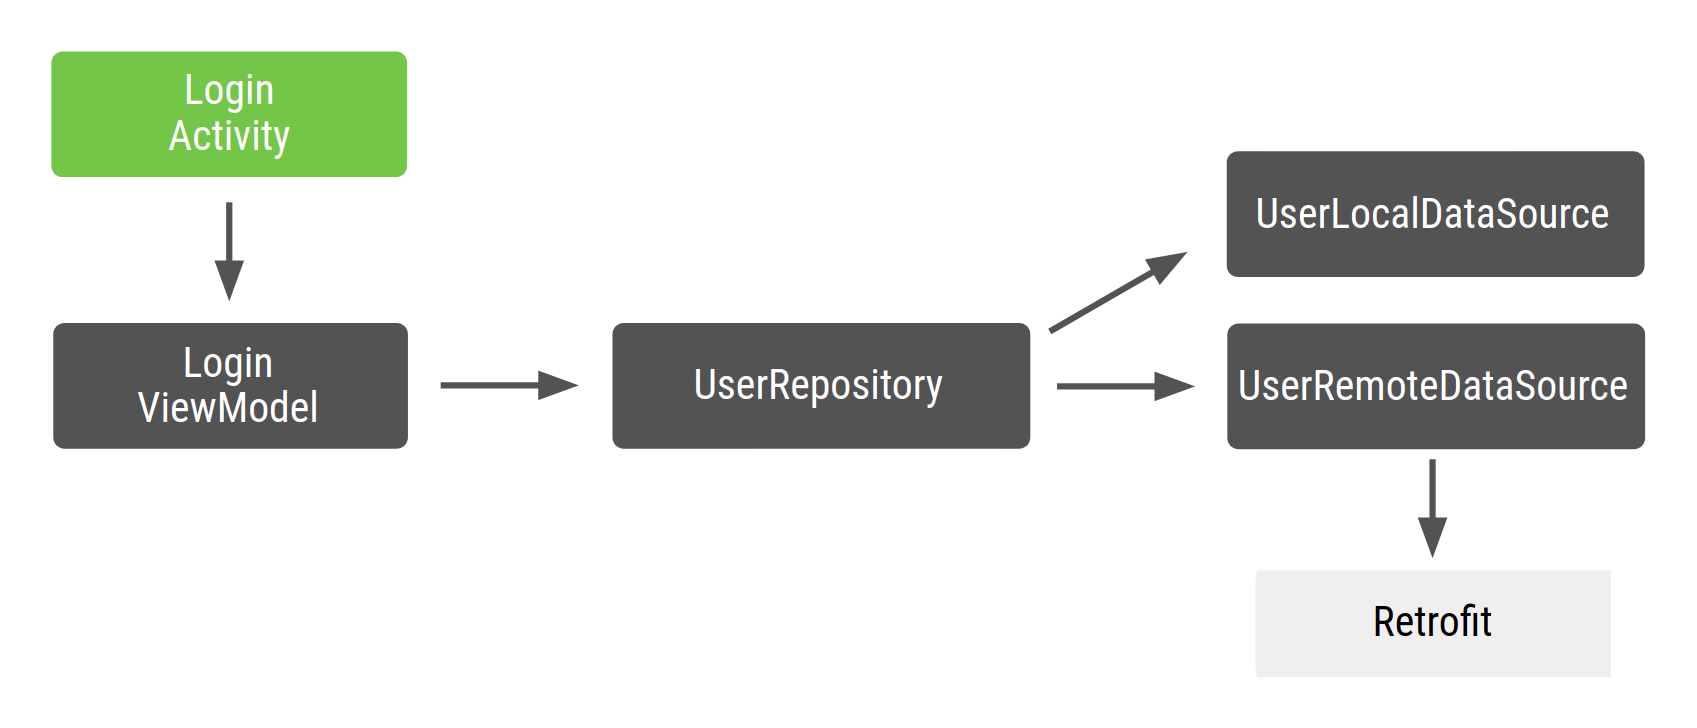 LoginActivity 依赖于 LoginViewModel，LoginViewModel 依赖于 UserRepository，UserRepository 依赖于 UserLocalDataSource 和 UserRemoteDataSource，而 UserRemoteDataSource 又依赖于 Retrofit。